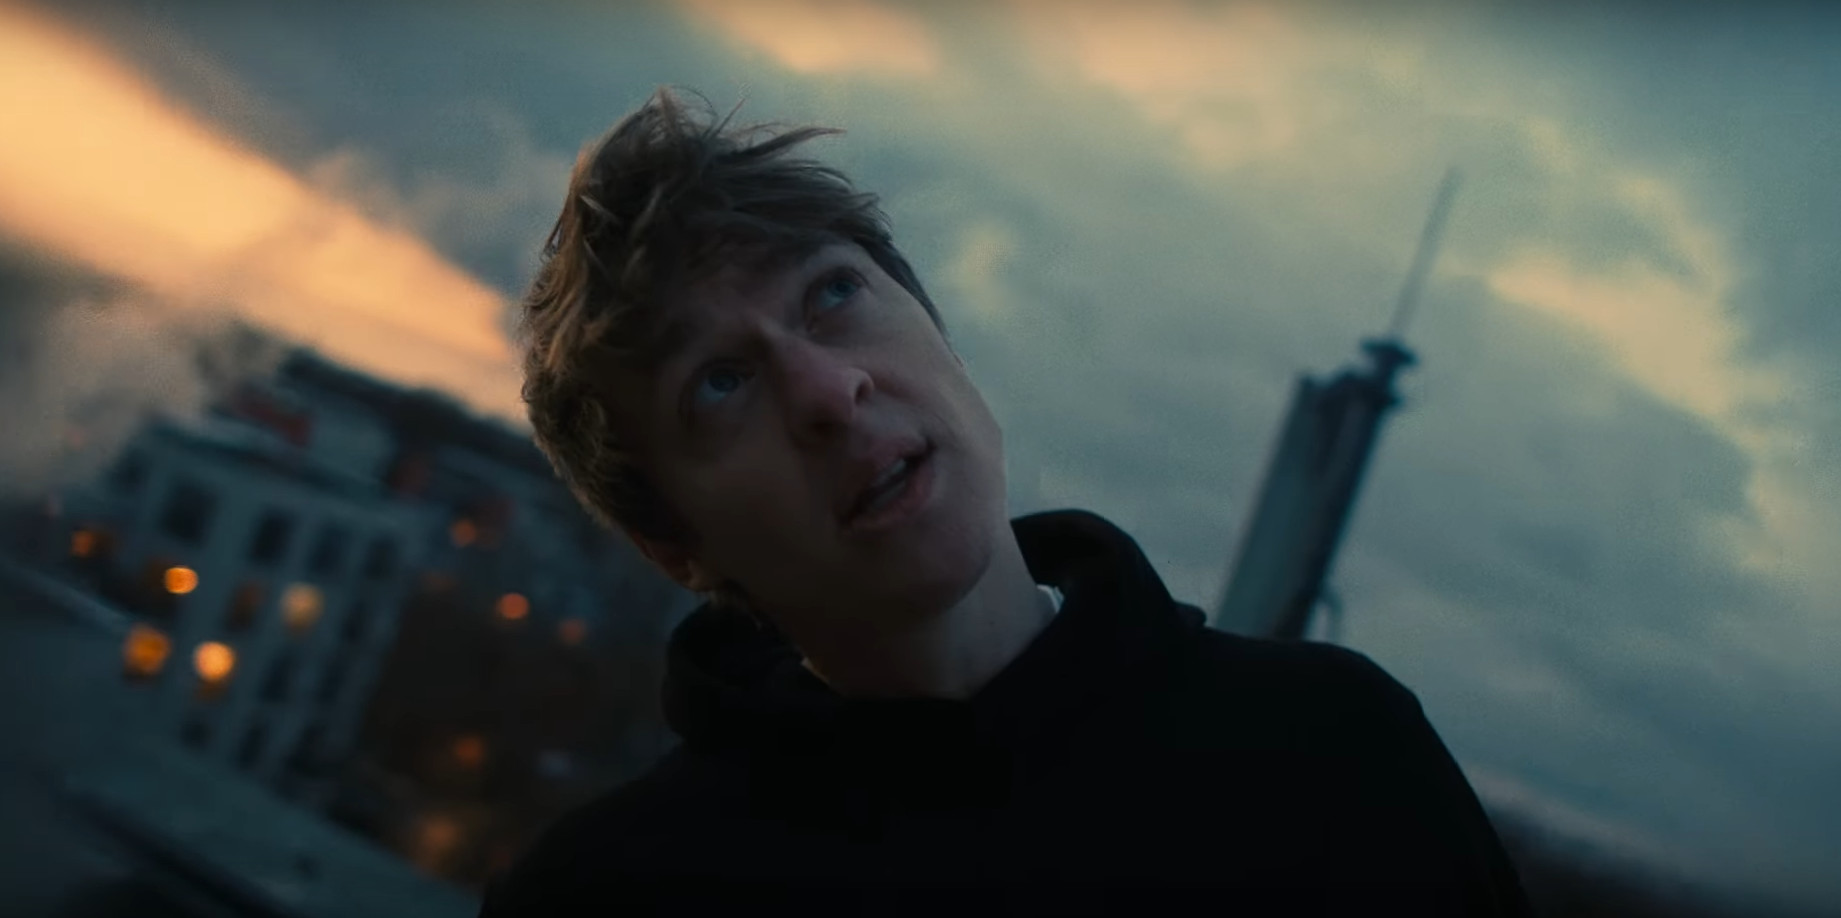 Sänger Schmyt in seinem Musikvideo "Macht Kaputt"